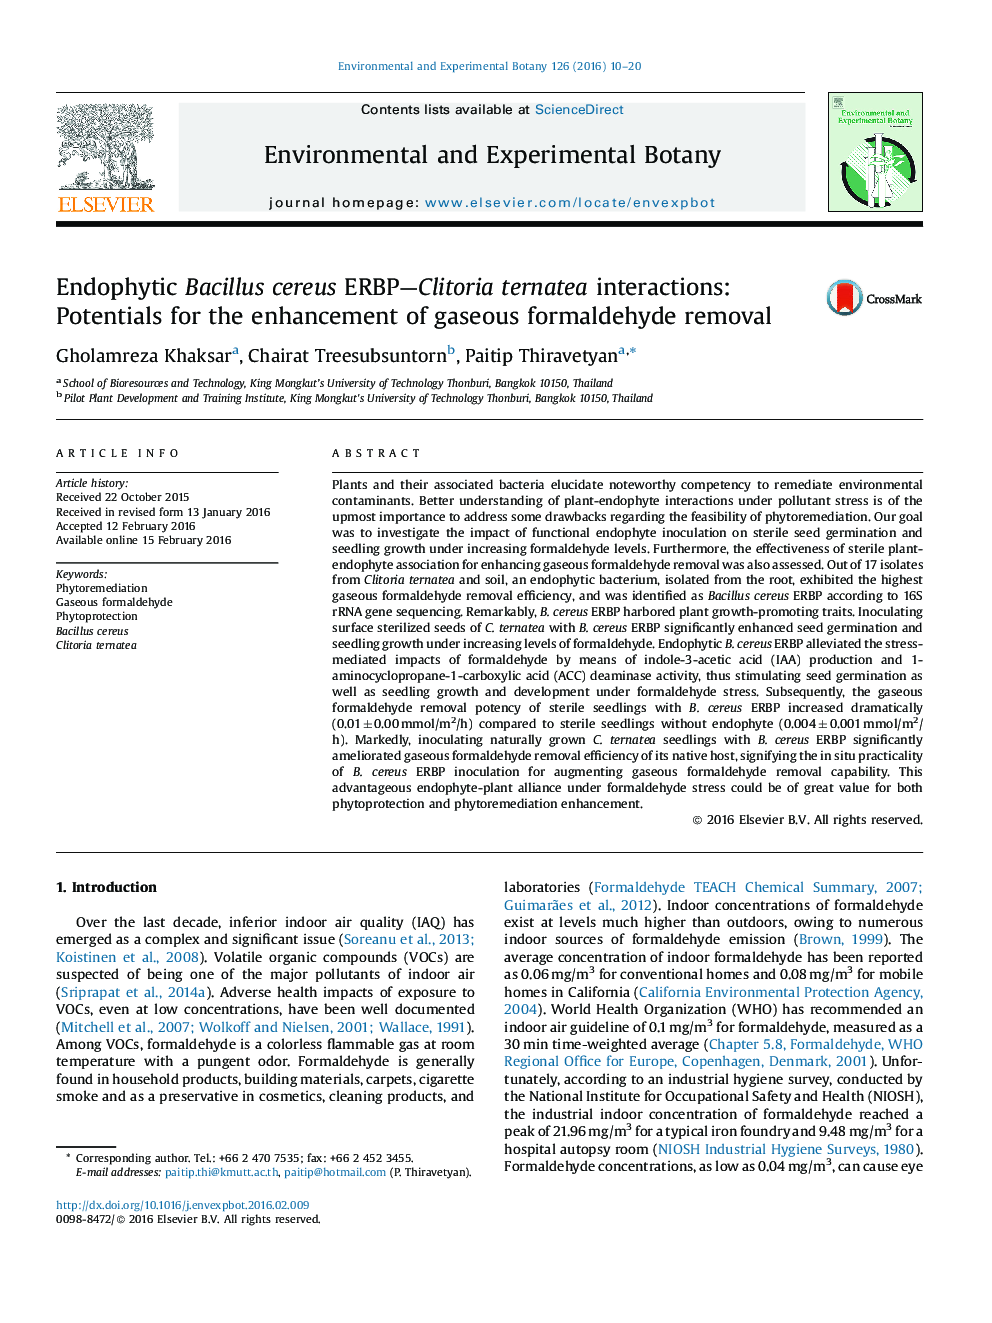 Endophytic Bacillus cereus ERBP—Clitoria ternatea interactions: Potentials for the enhancement of gaseous formaldehyde removal